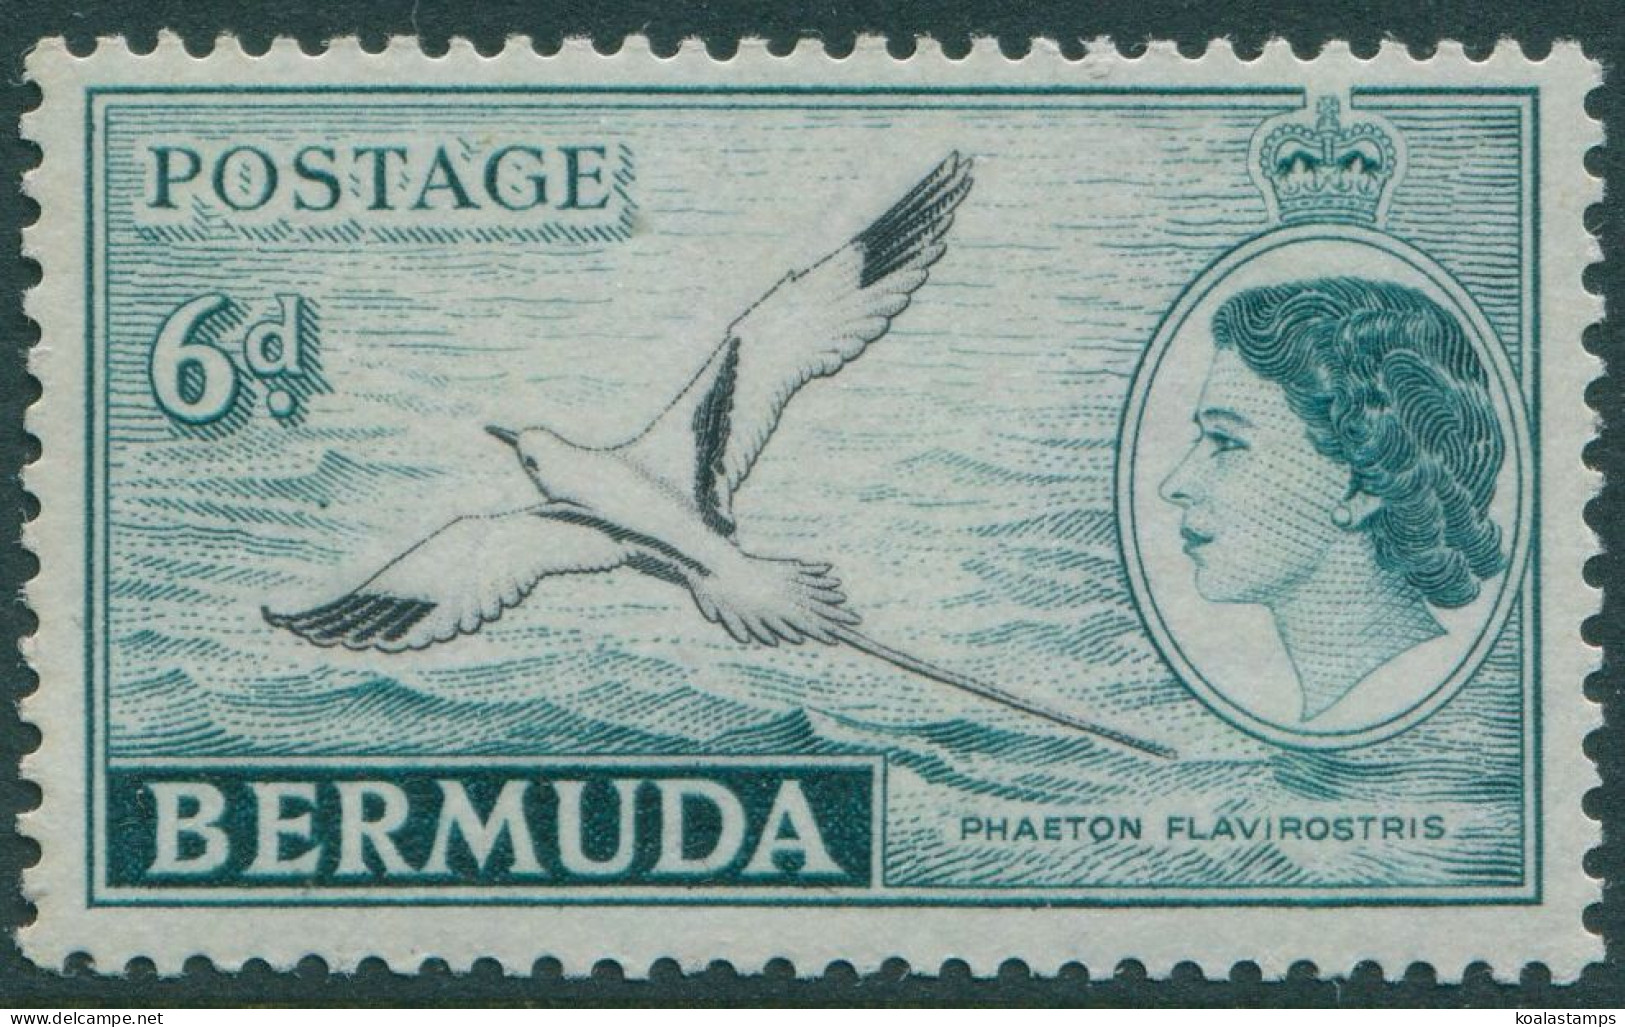 Bermuda 1953 SG143 6d Black And Turquoise QEII White-tailed Tropic Bird MNH - Bermuda